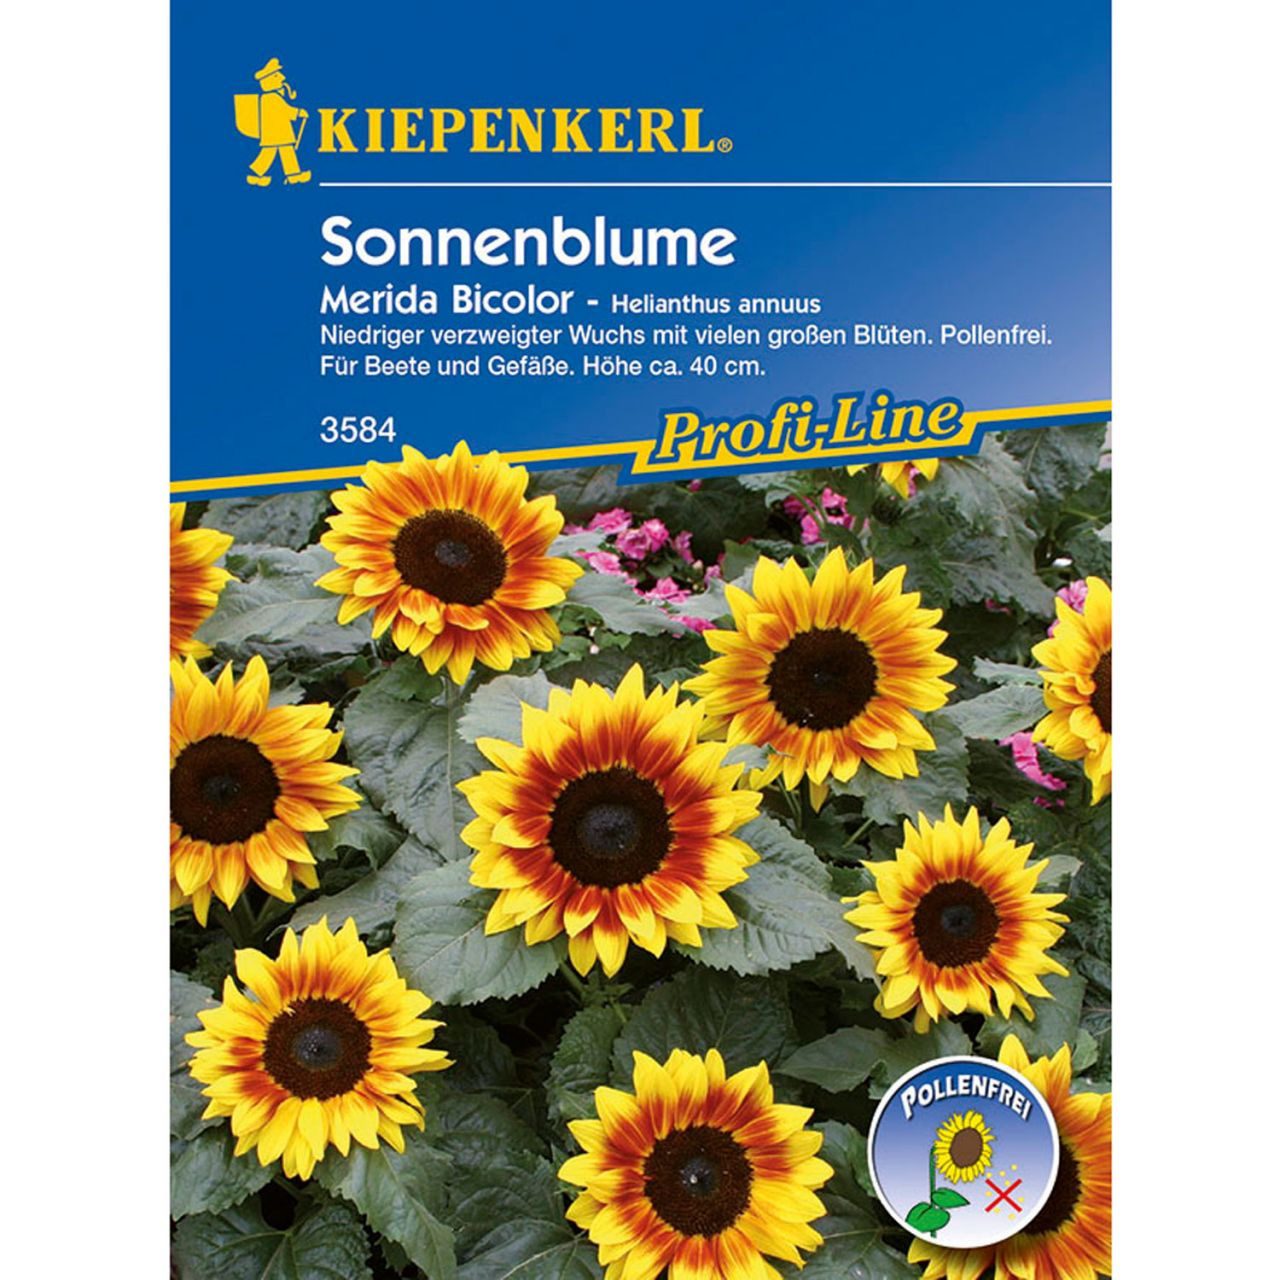 Sonnenblume 'Merida Bicolor' von Kiepenkerl